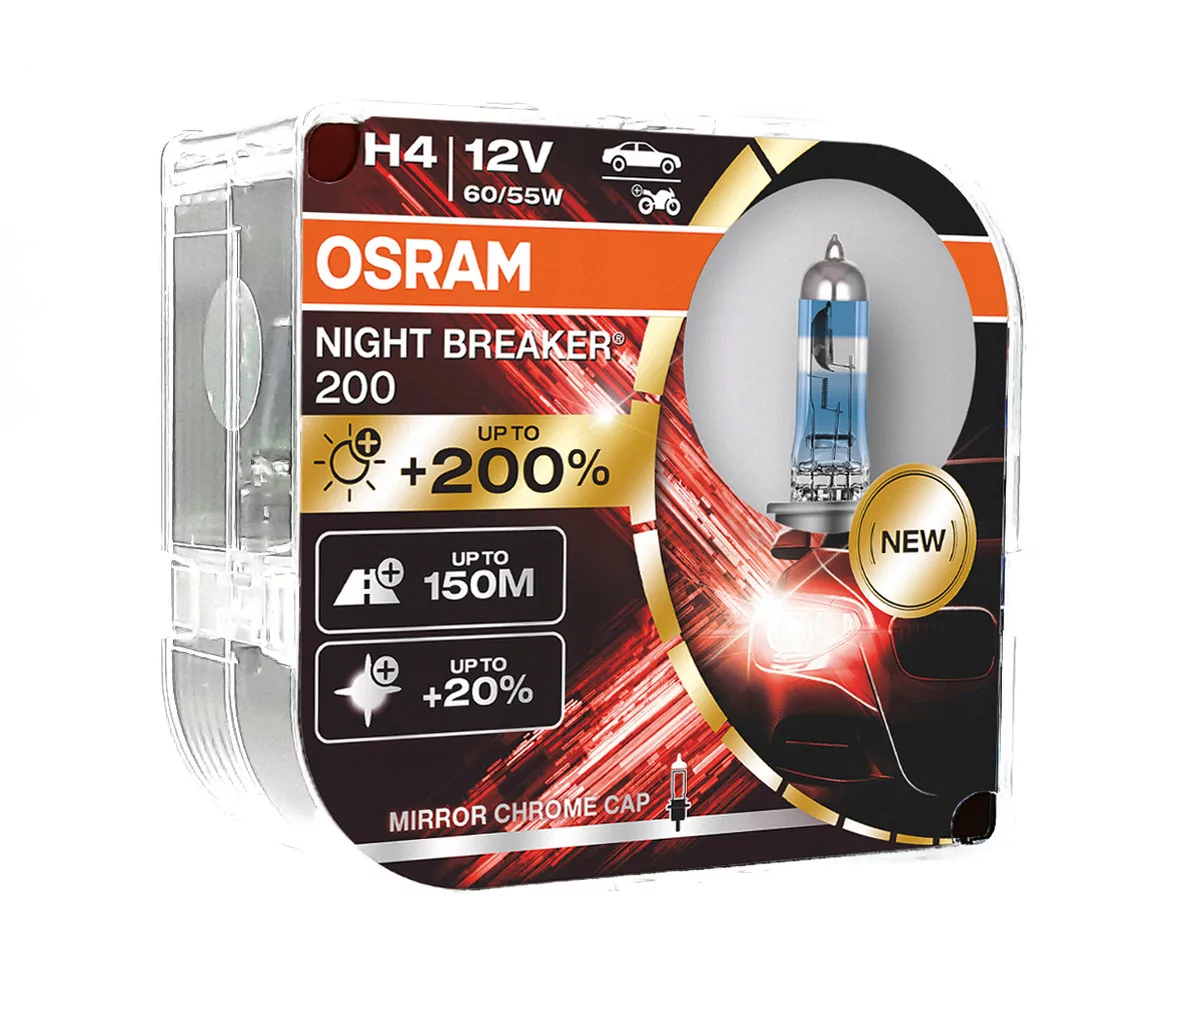 OSRAM Żarówki halogenowe h4 12v 60/55w p43t night breaker 200 /2 szt. AP_222646